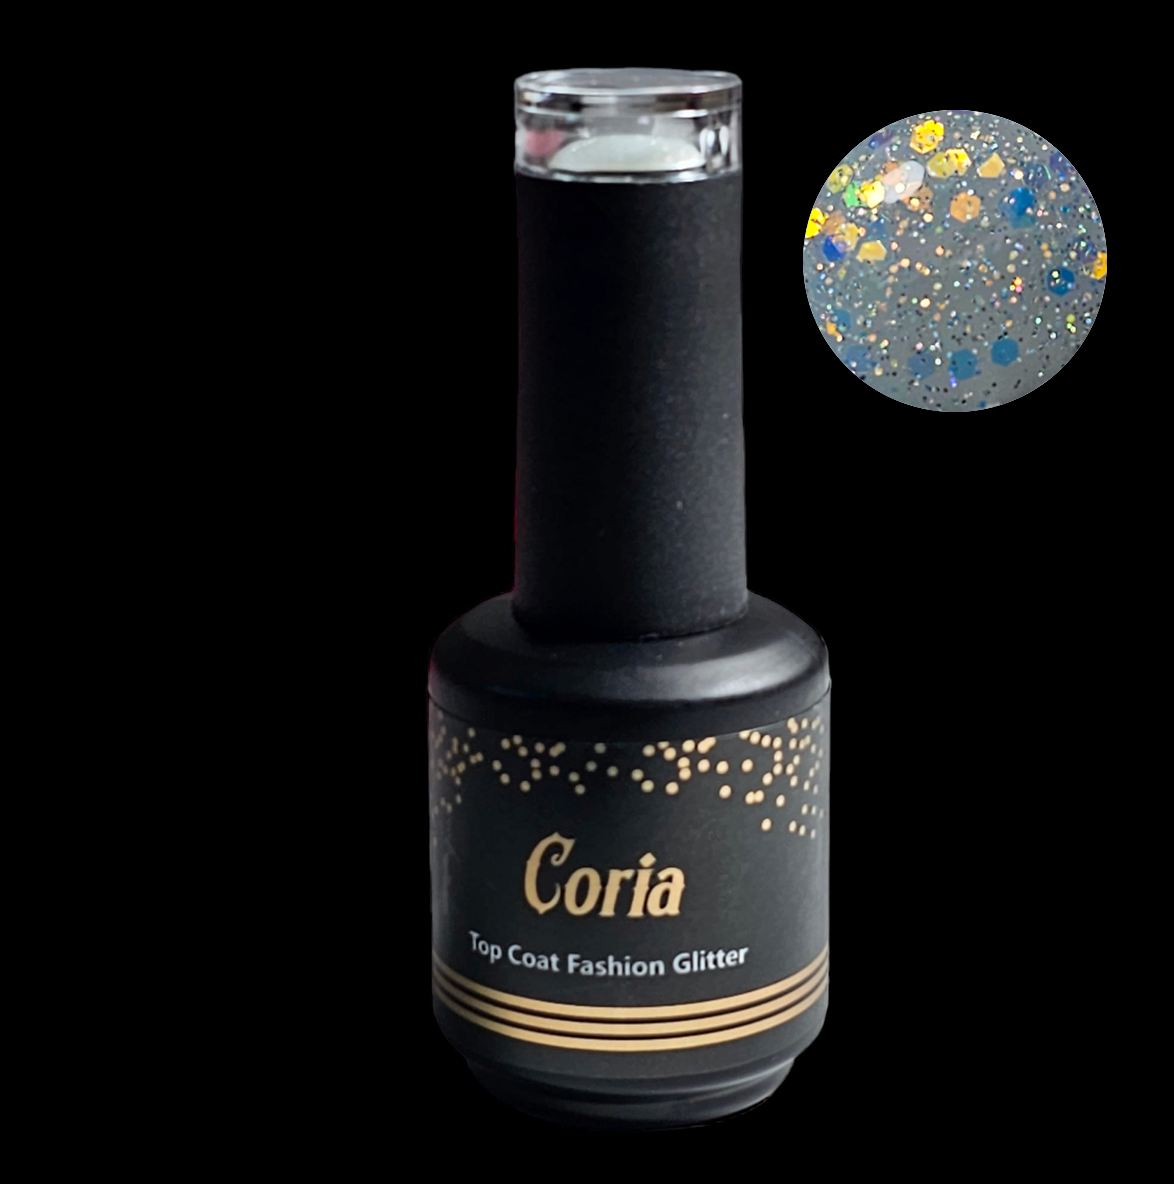 Top Coat Fashion Glitter Coria 15 ml 109